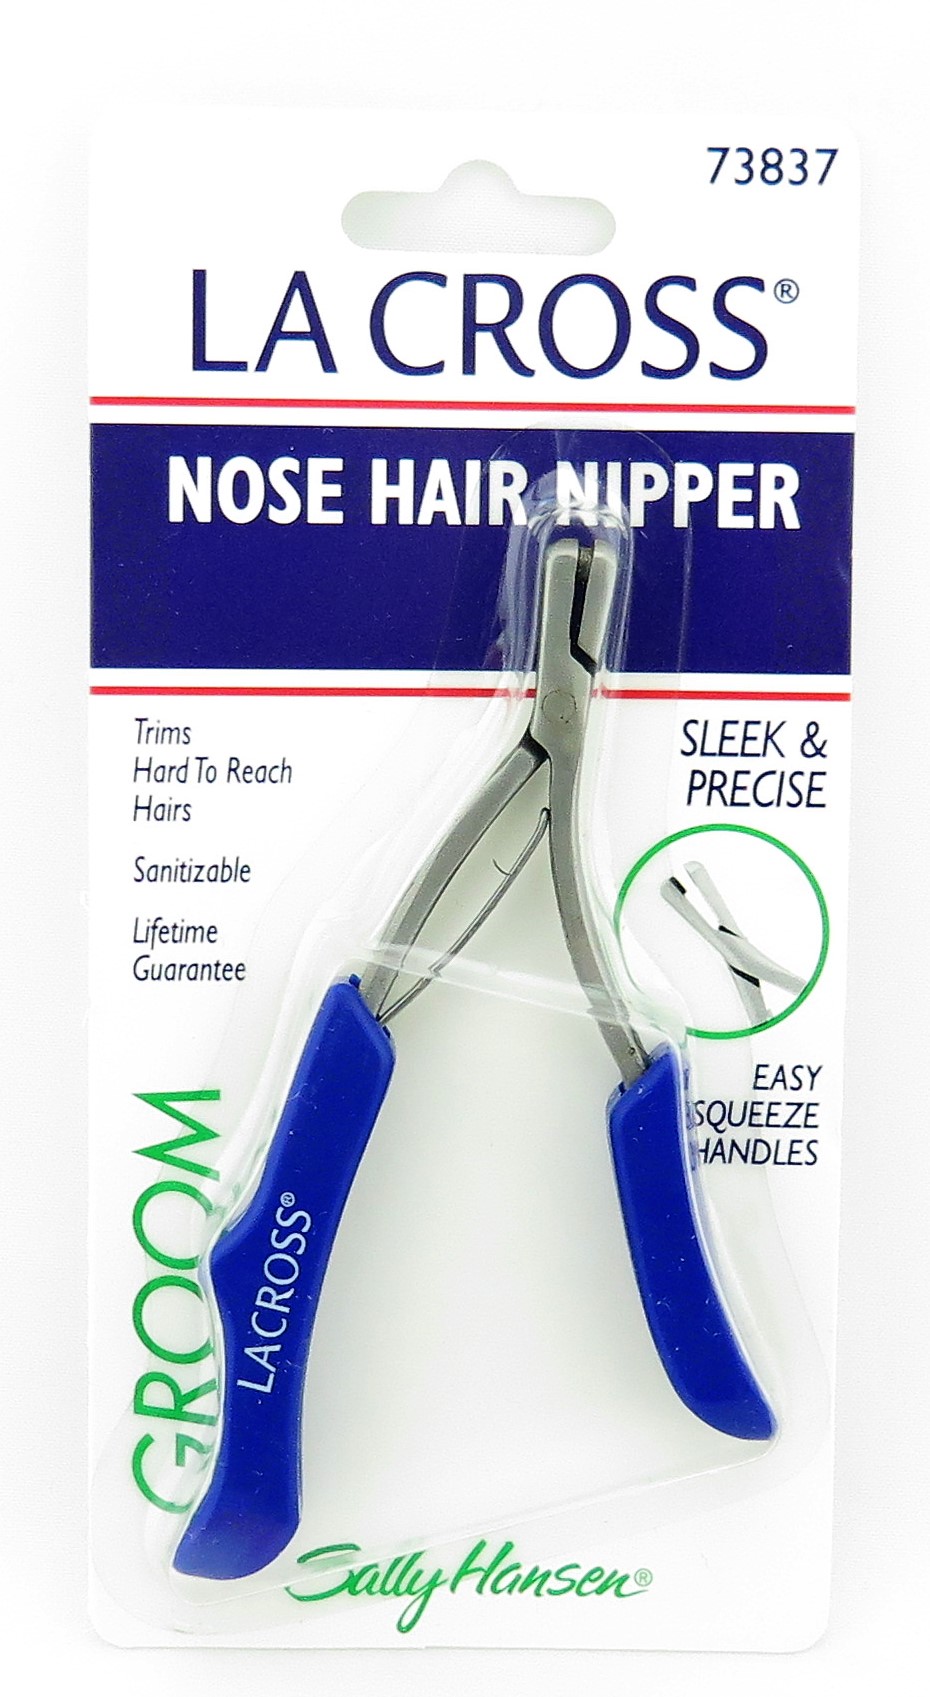 La Cross Nose Hair Nipper Sleek & Precise